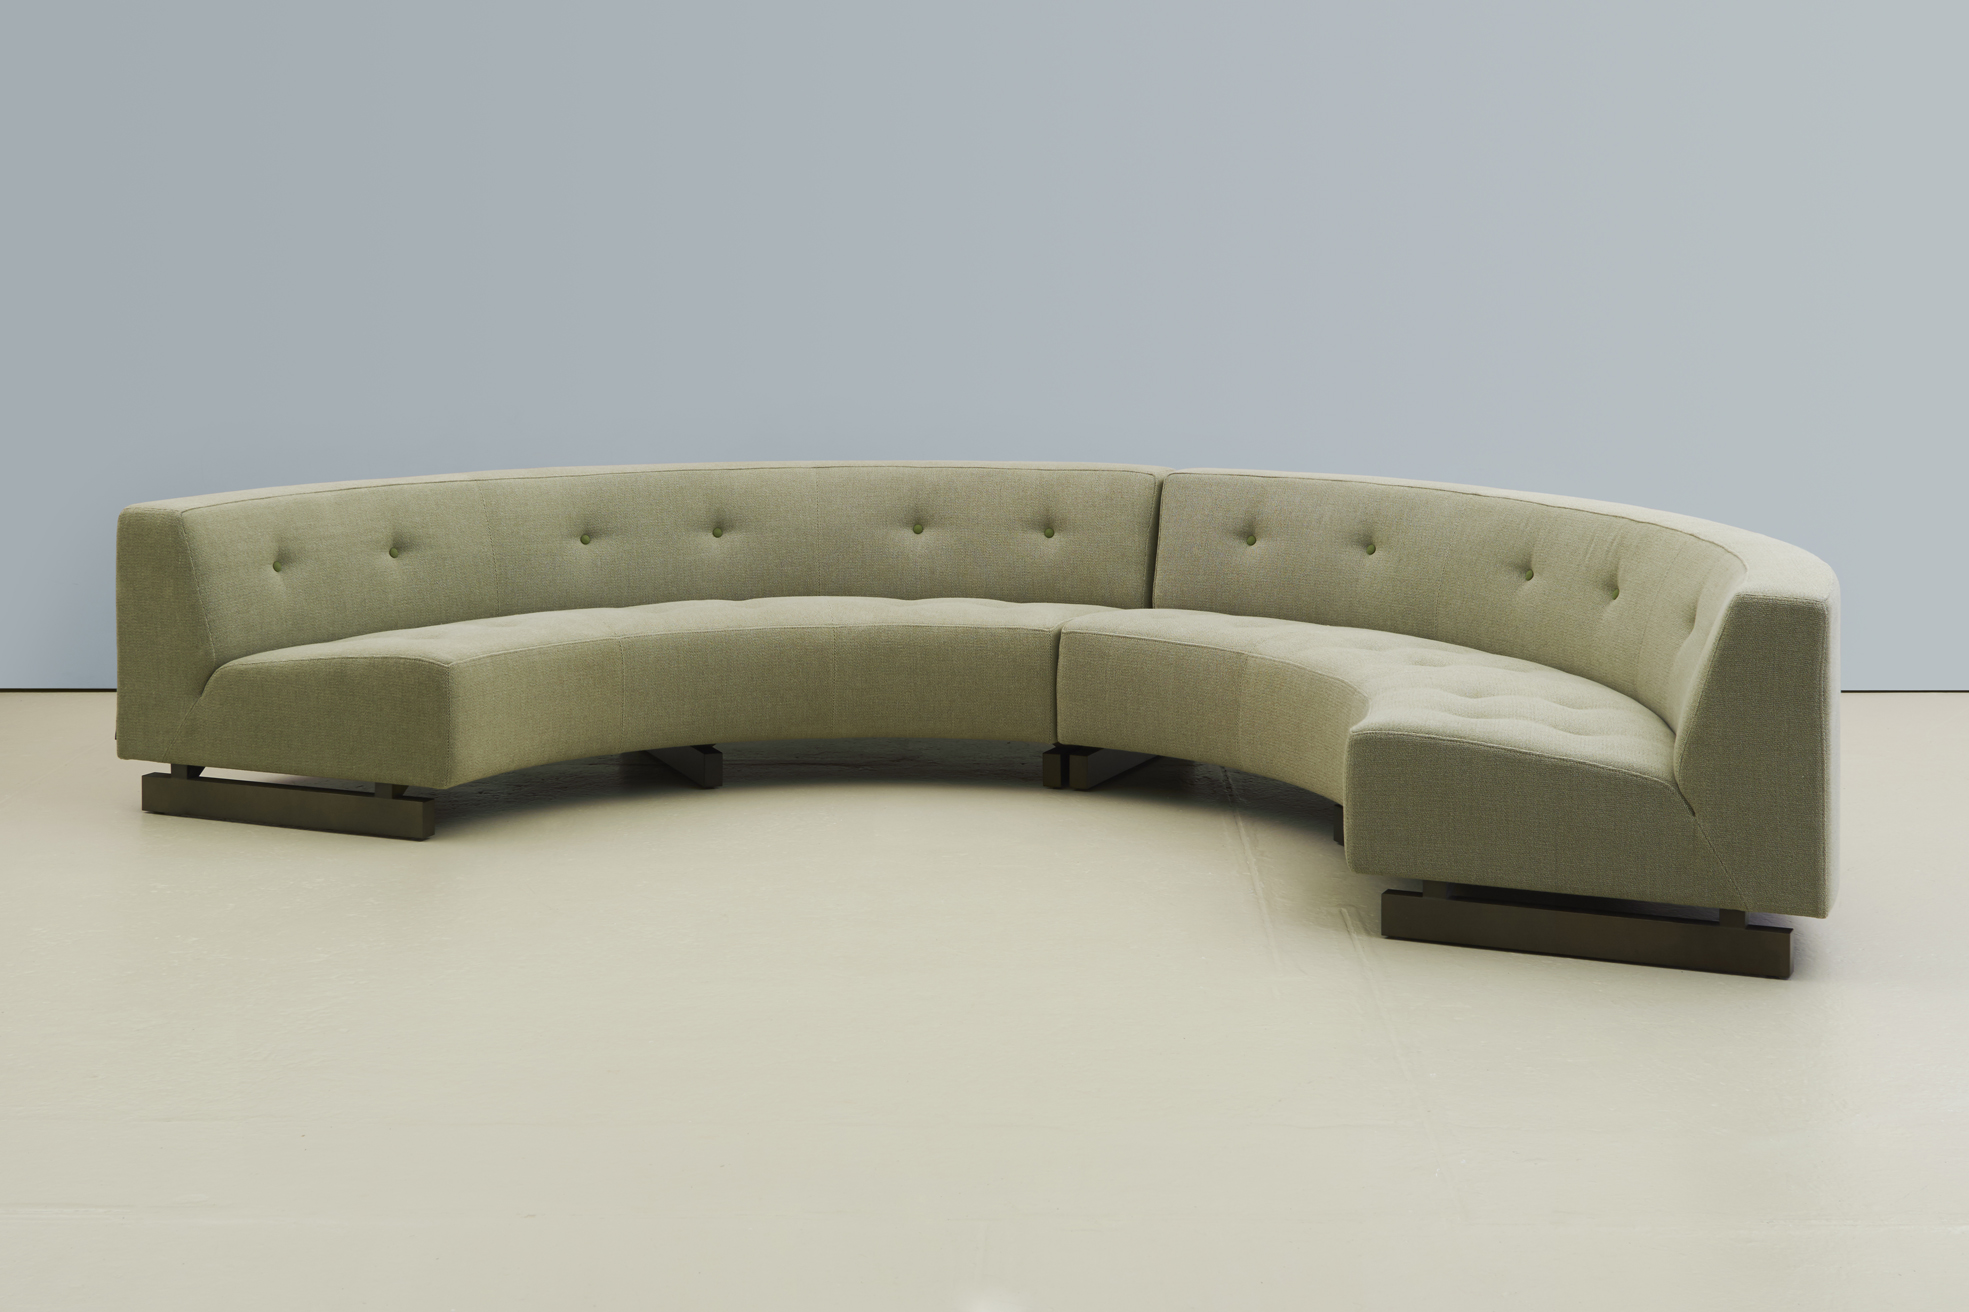 hm46v1 curved sofa (1) (low res).jpg